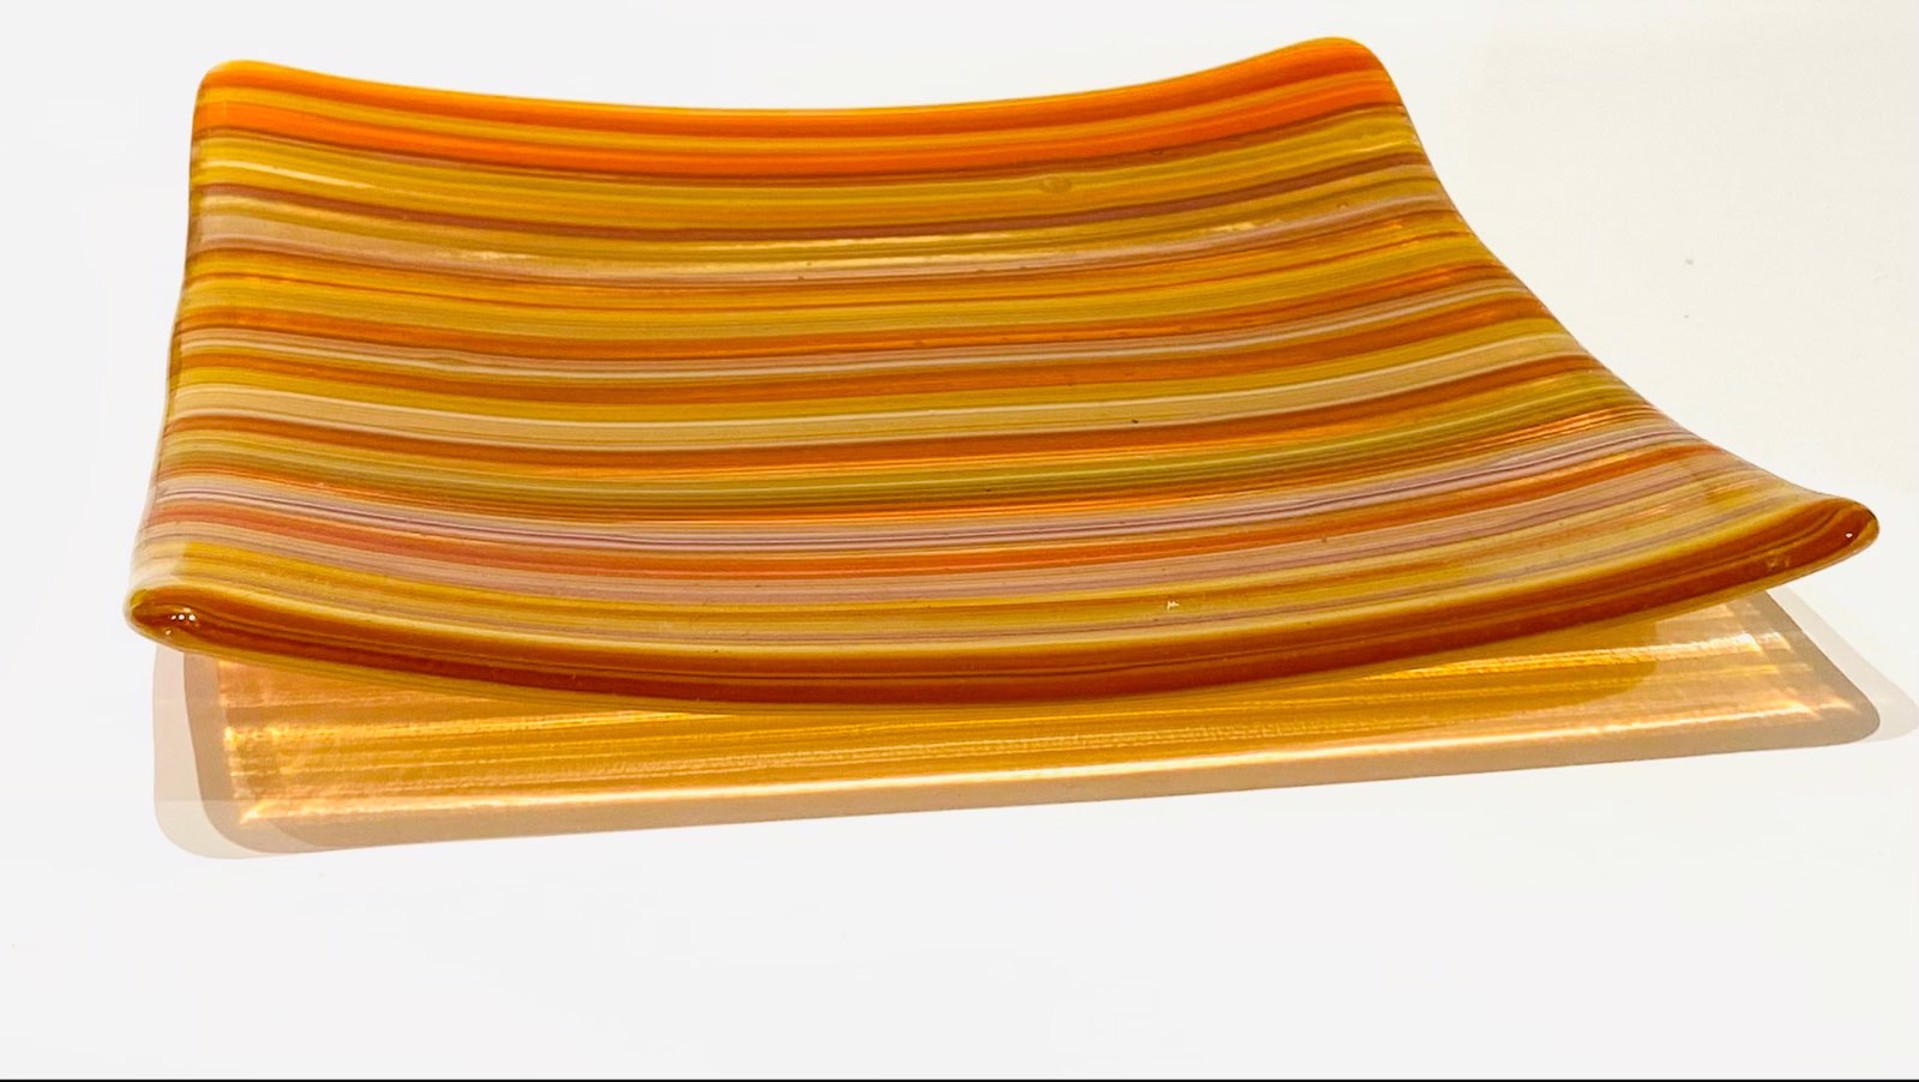 Plate~Orange Rods by Greg Rawls